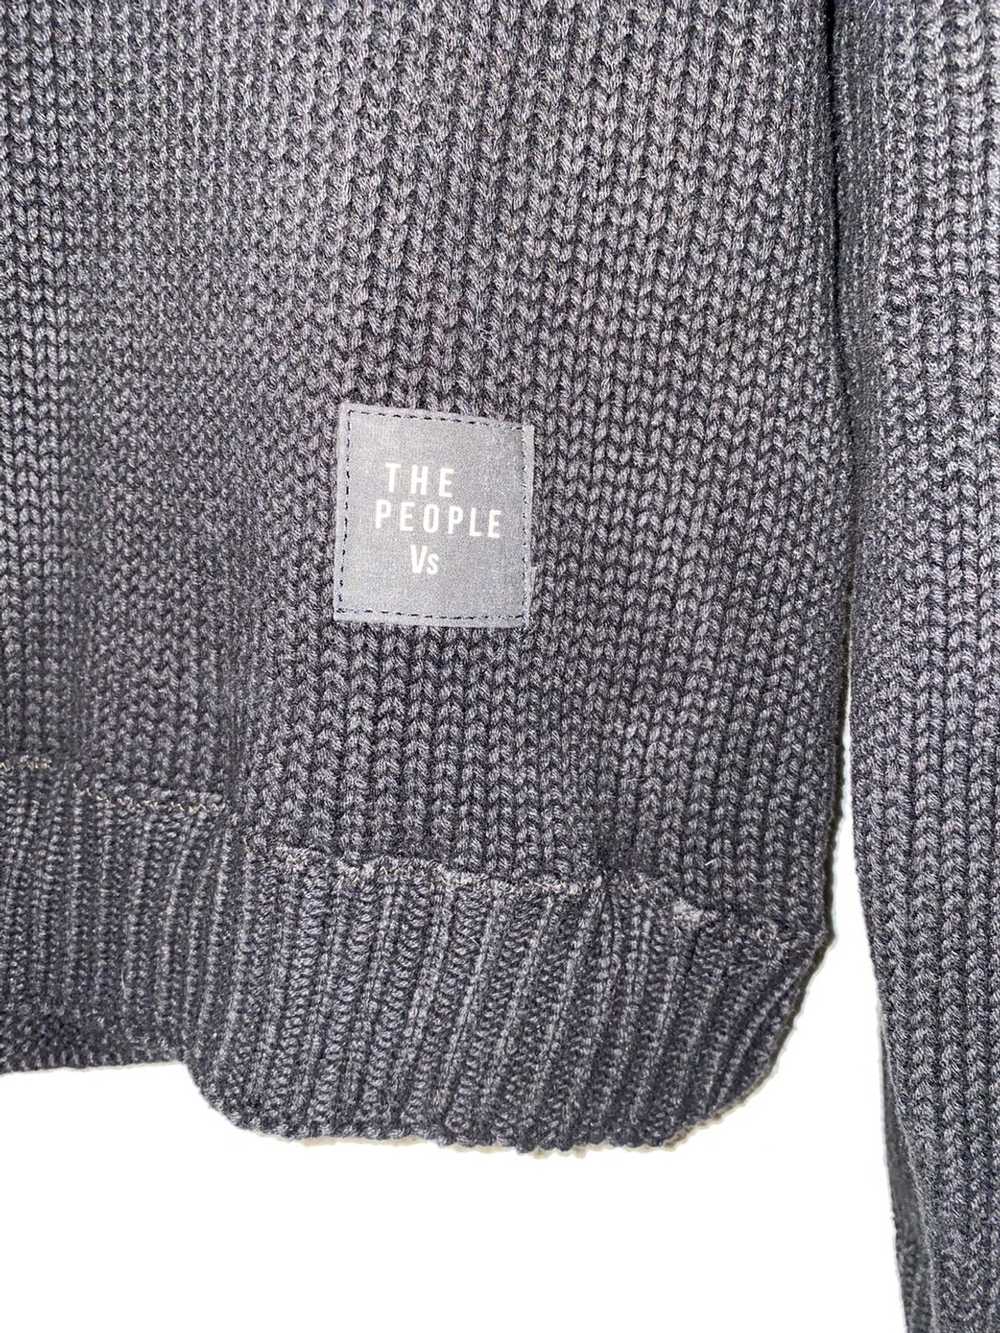 The People Vs Black Knitwear Sweater - image 2